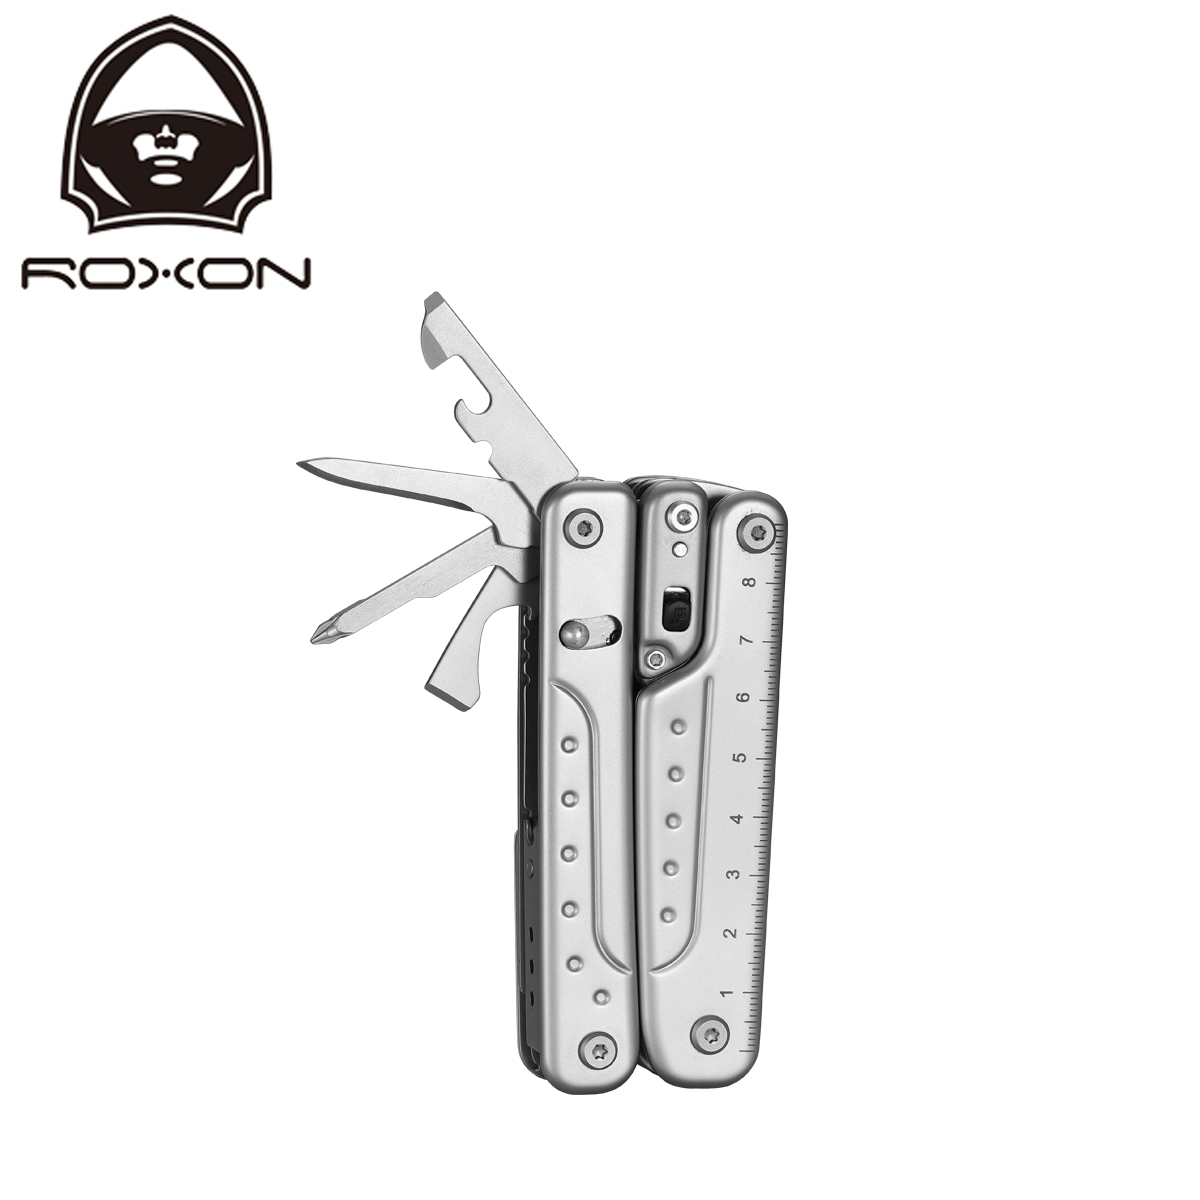 ROXON Phantom 16-IN-1 Multi-Tool - Powa Beam